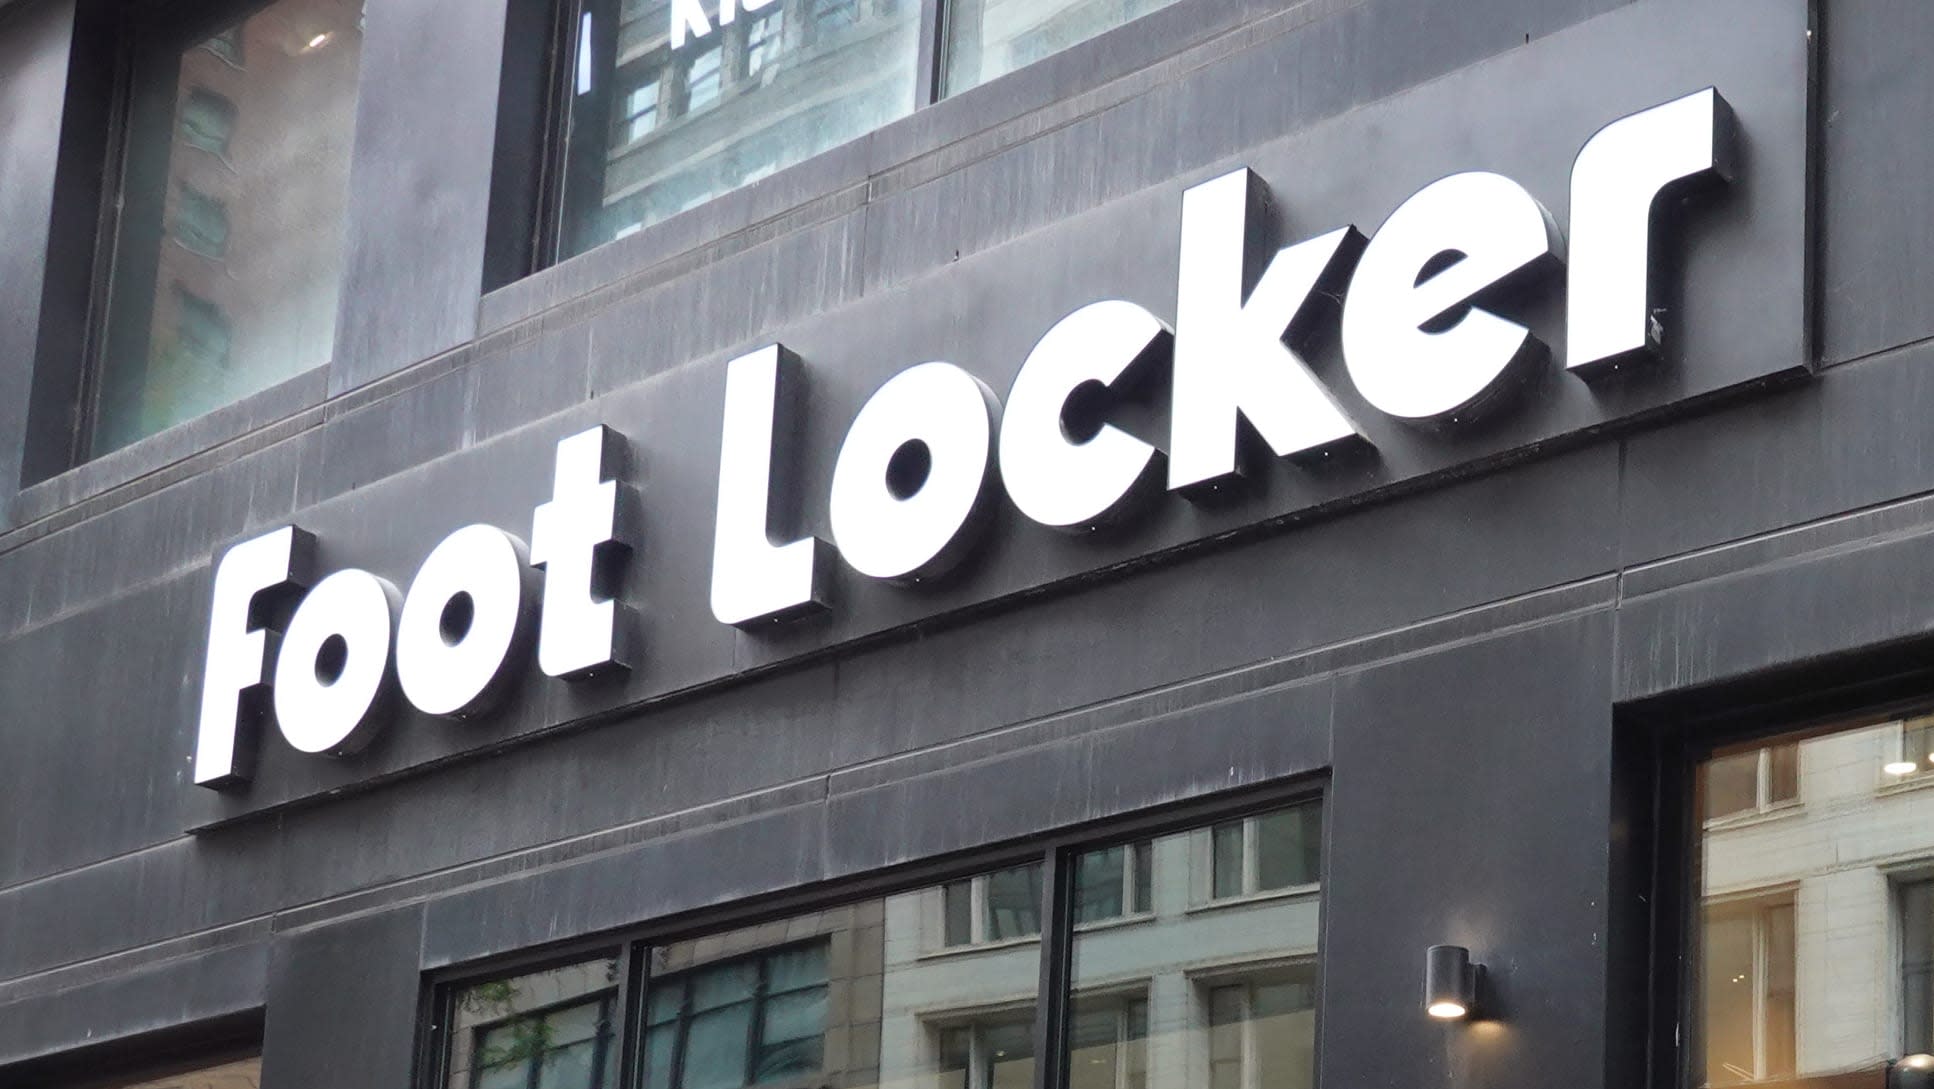 Foot Locker Shuts Down Lady Foot Locker Brand - Retail TouchPoints